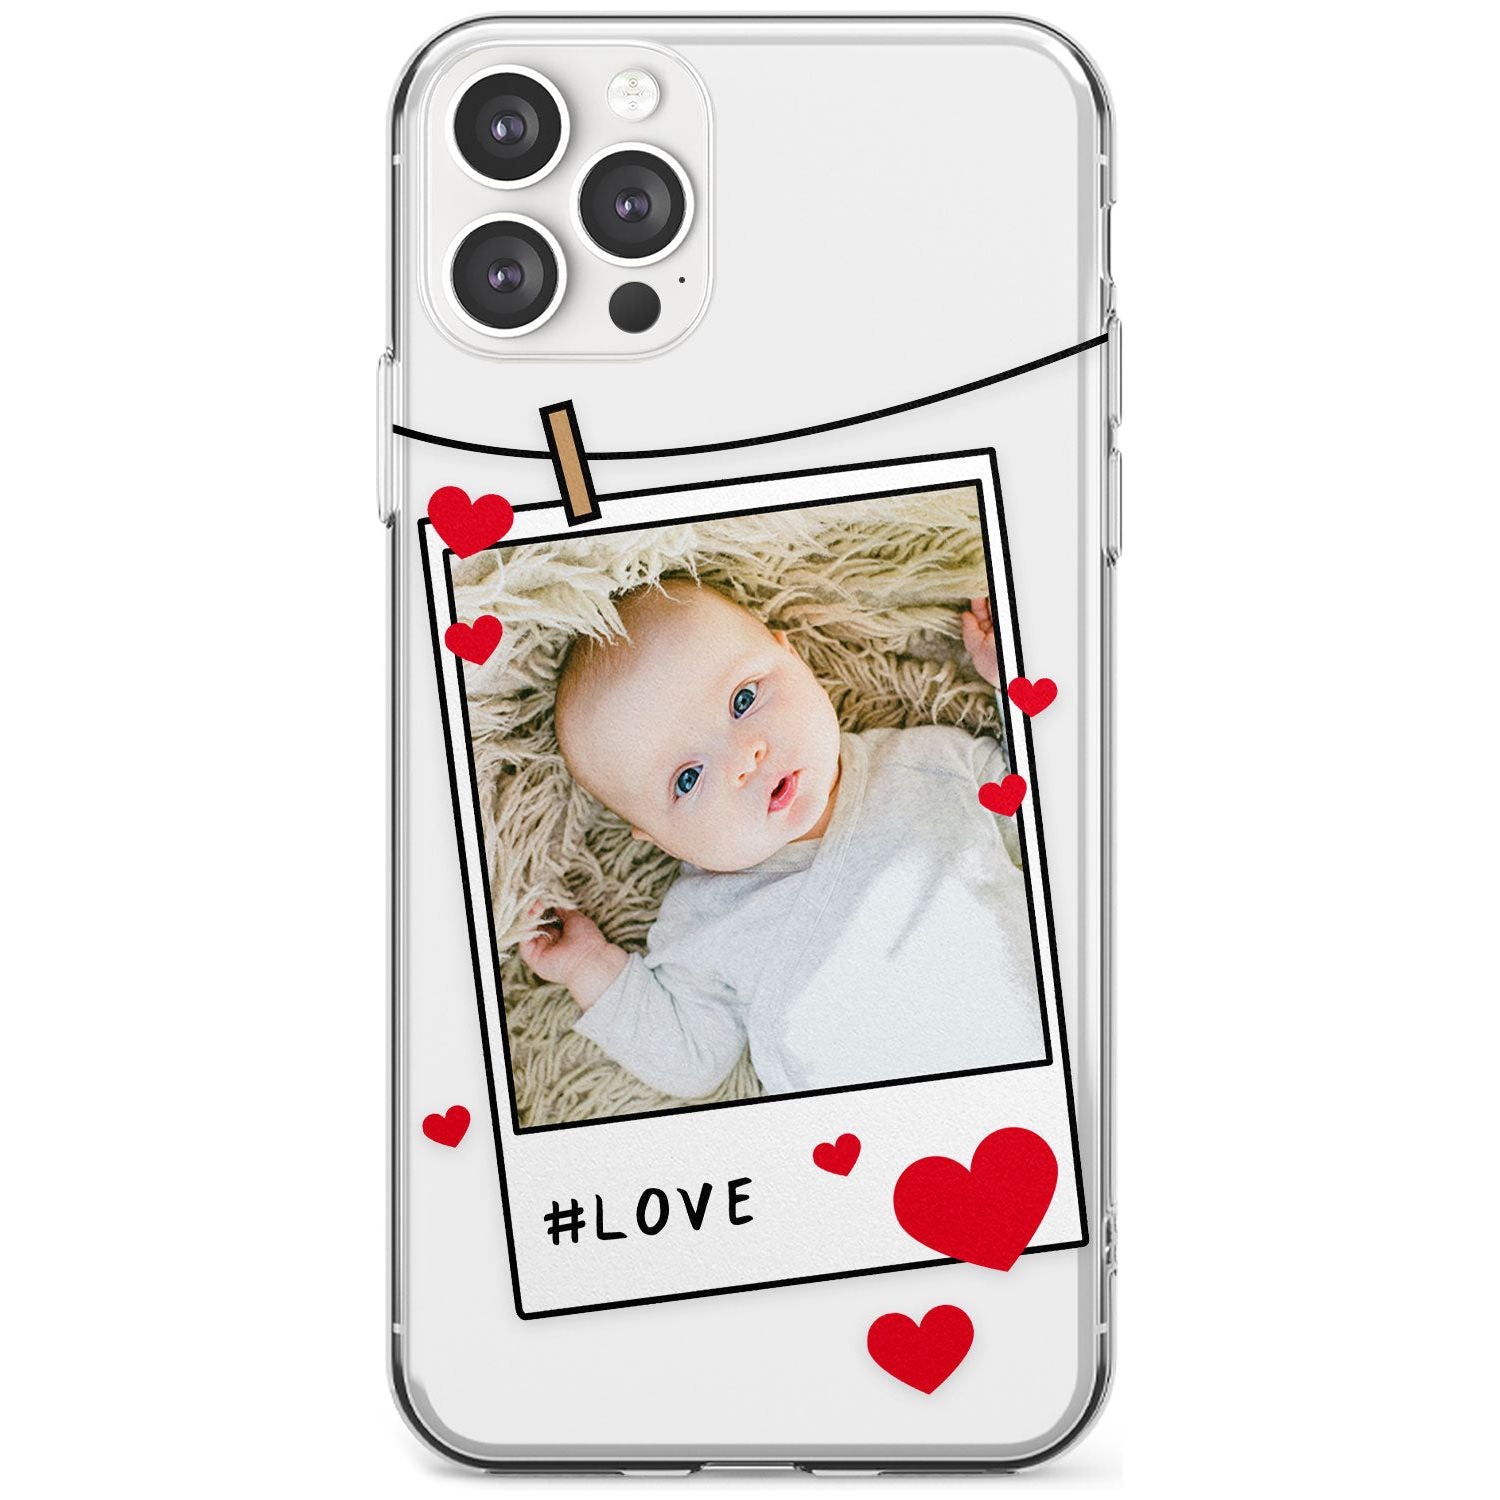 Love Instant Film Black Impact Phone Case for iPhone 11 Pro Max